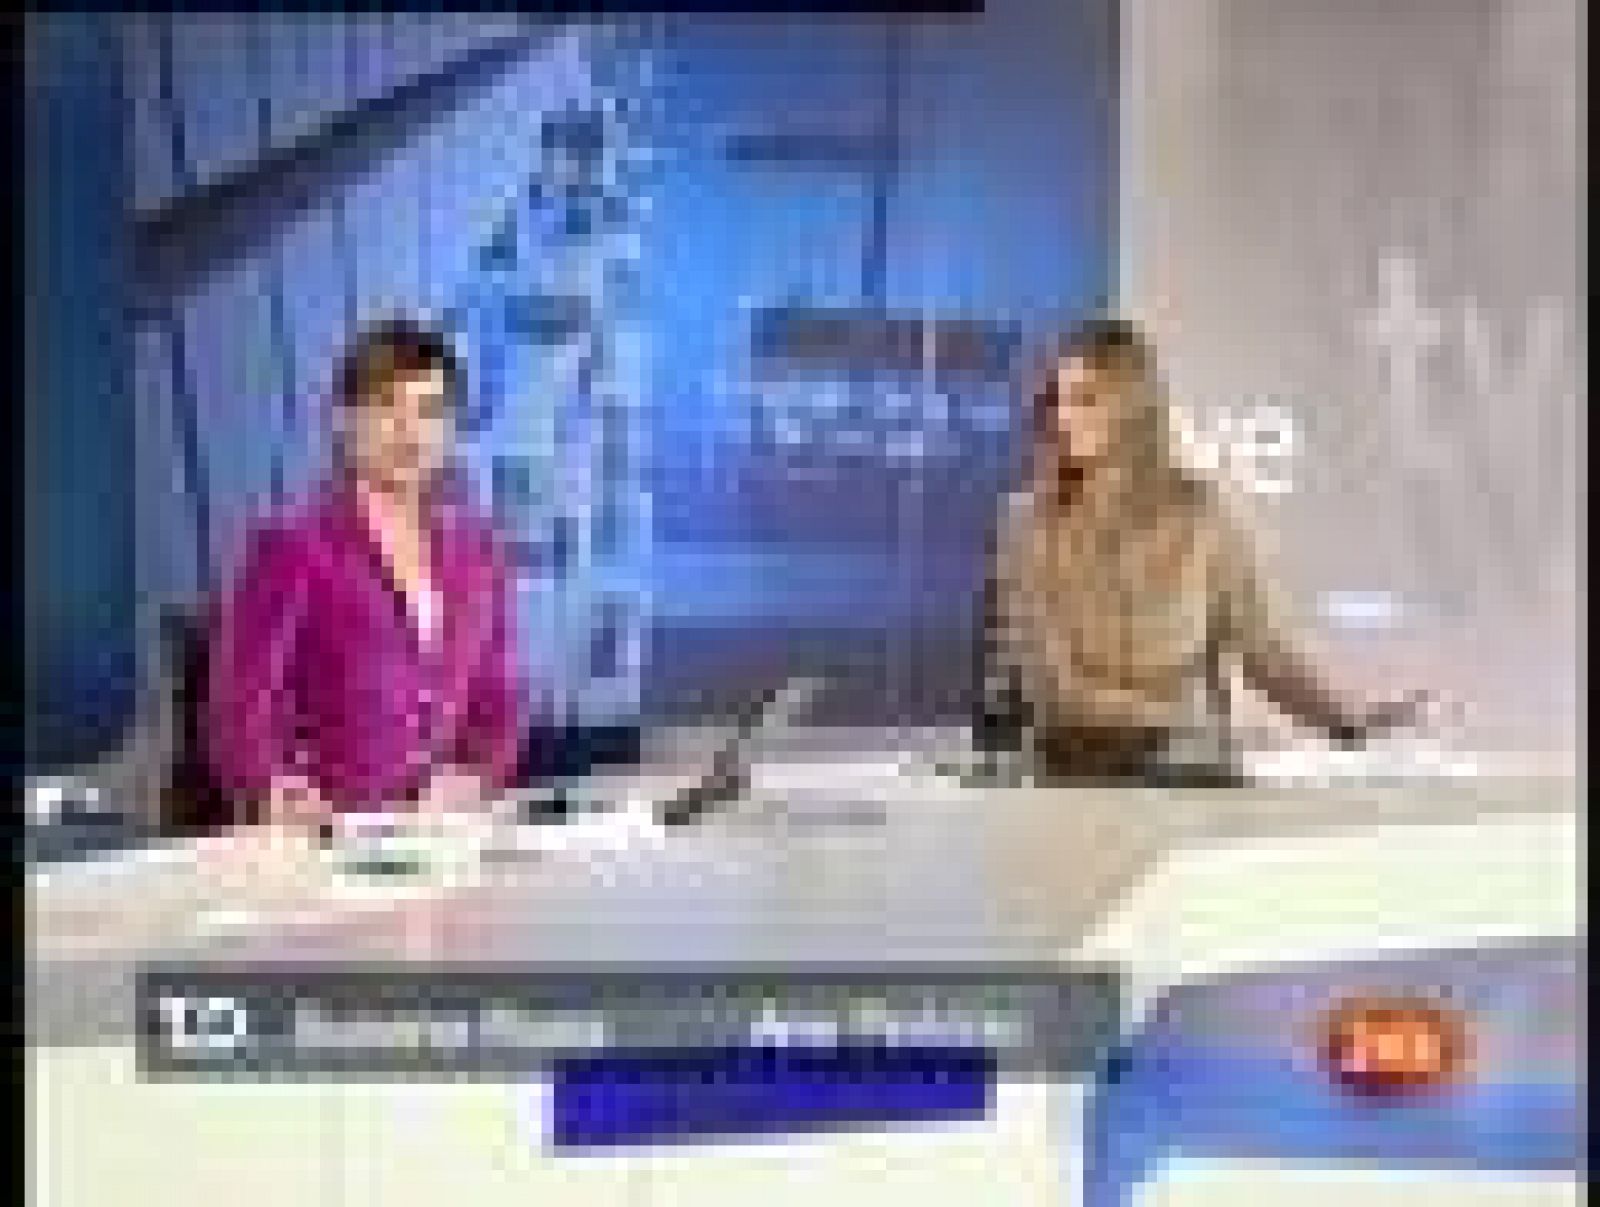 Telediario 1: Telediario Matinal en 4' - 10/03/11 | RTVE Play